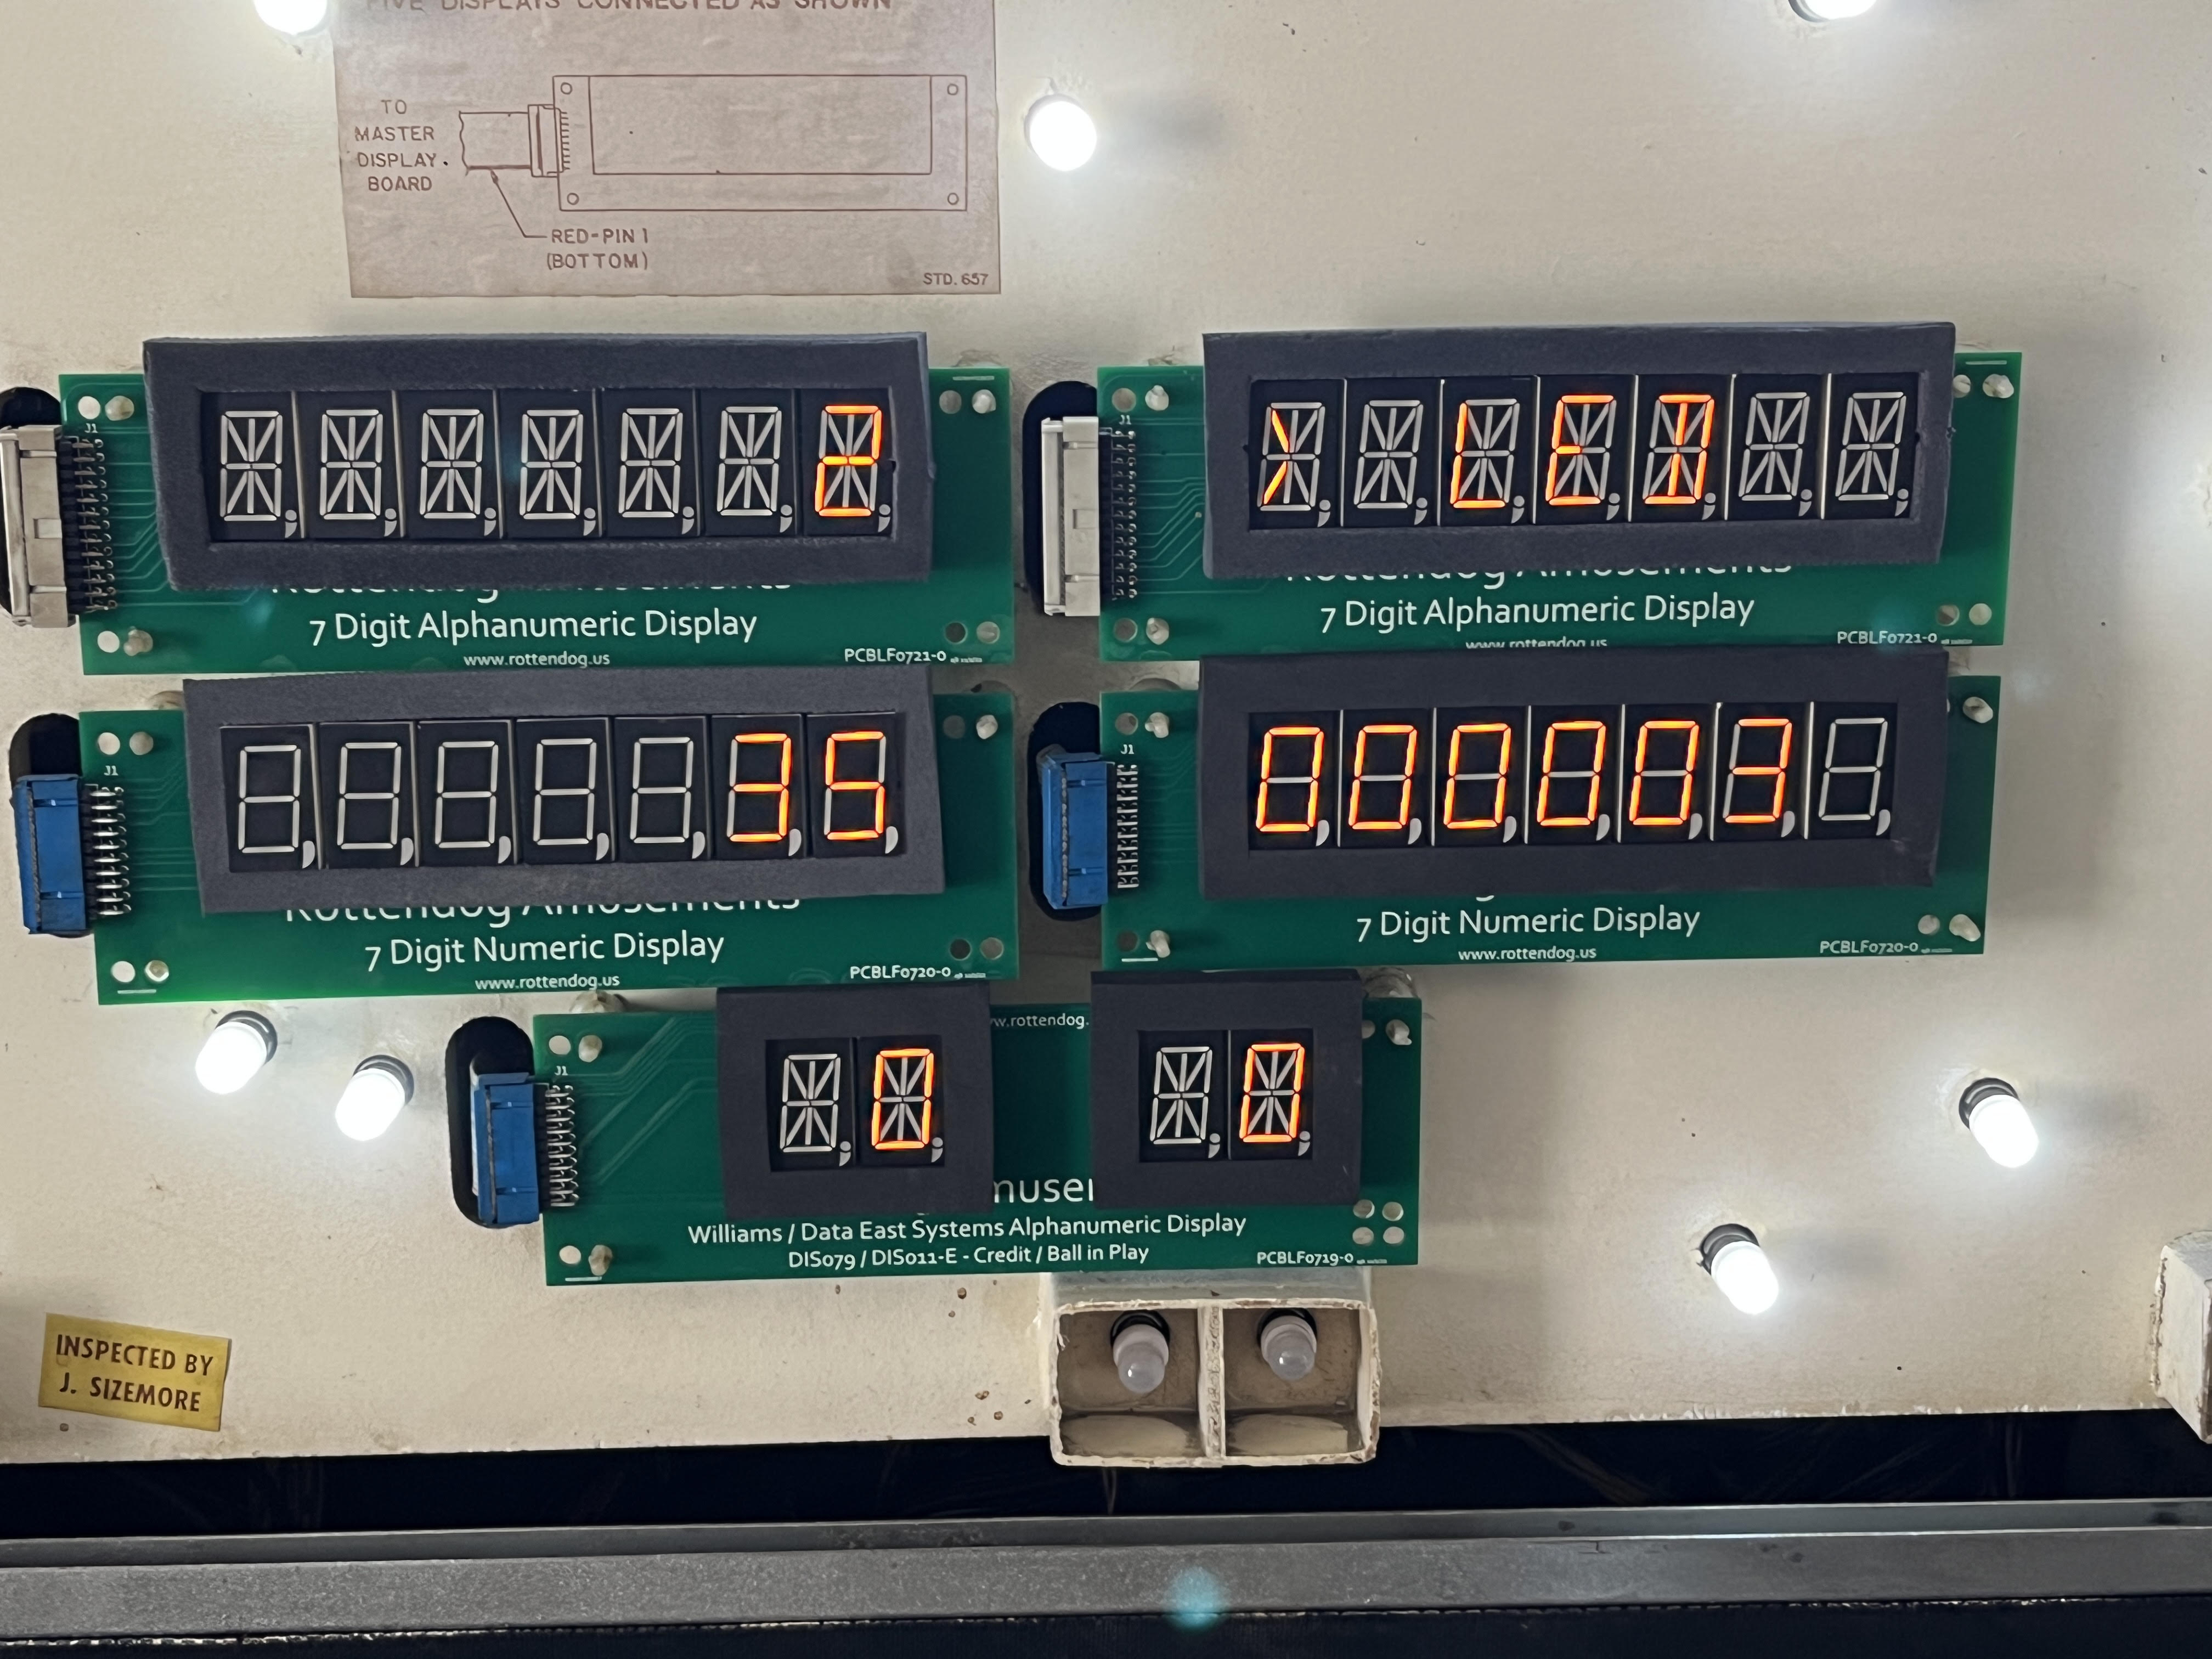 A 7-digit alphanumeric display